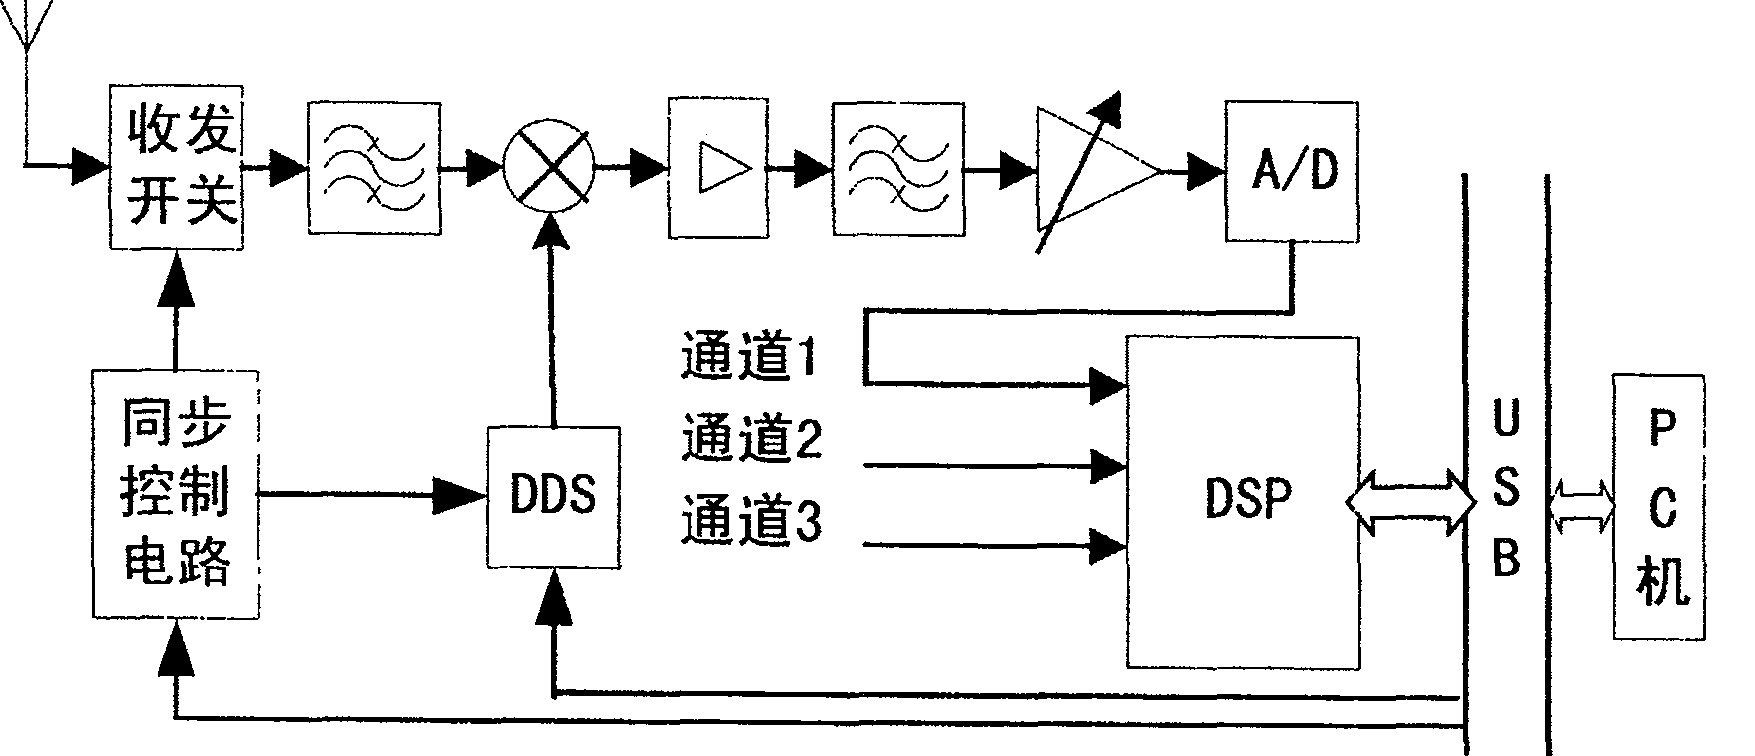 Digital signal processing method for multi-channel high-frequency radar receiver